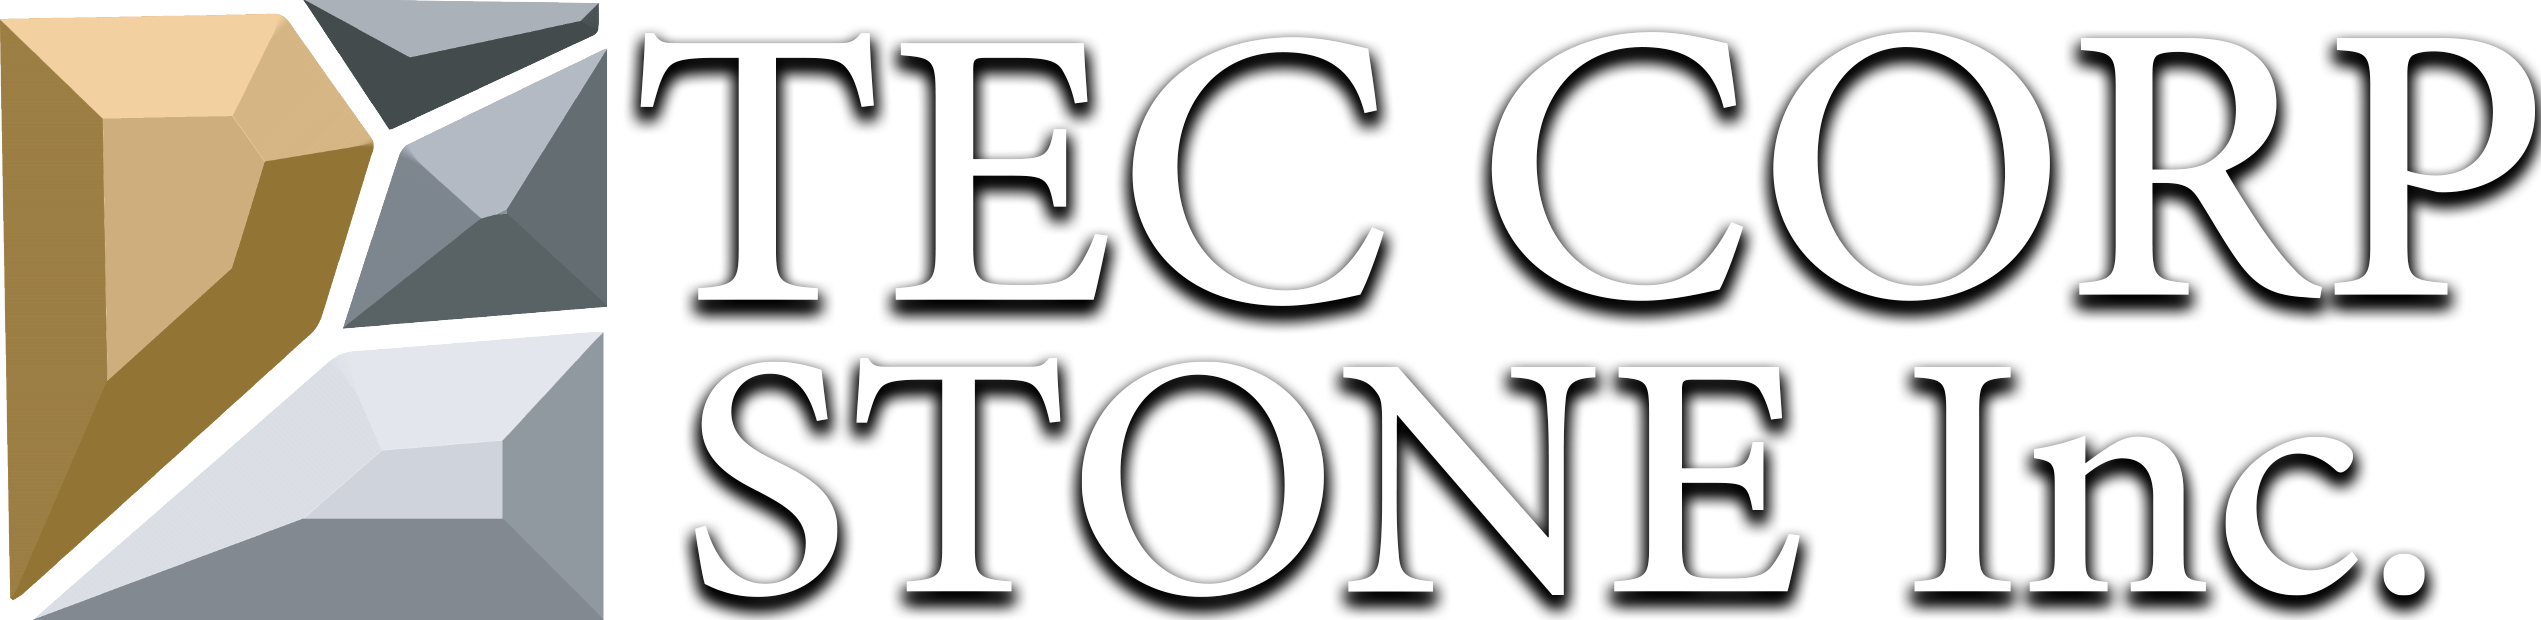 Teccorp stone logo